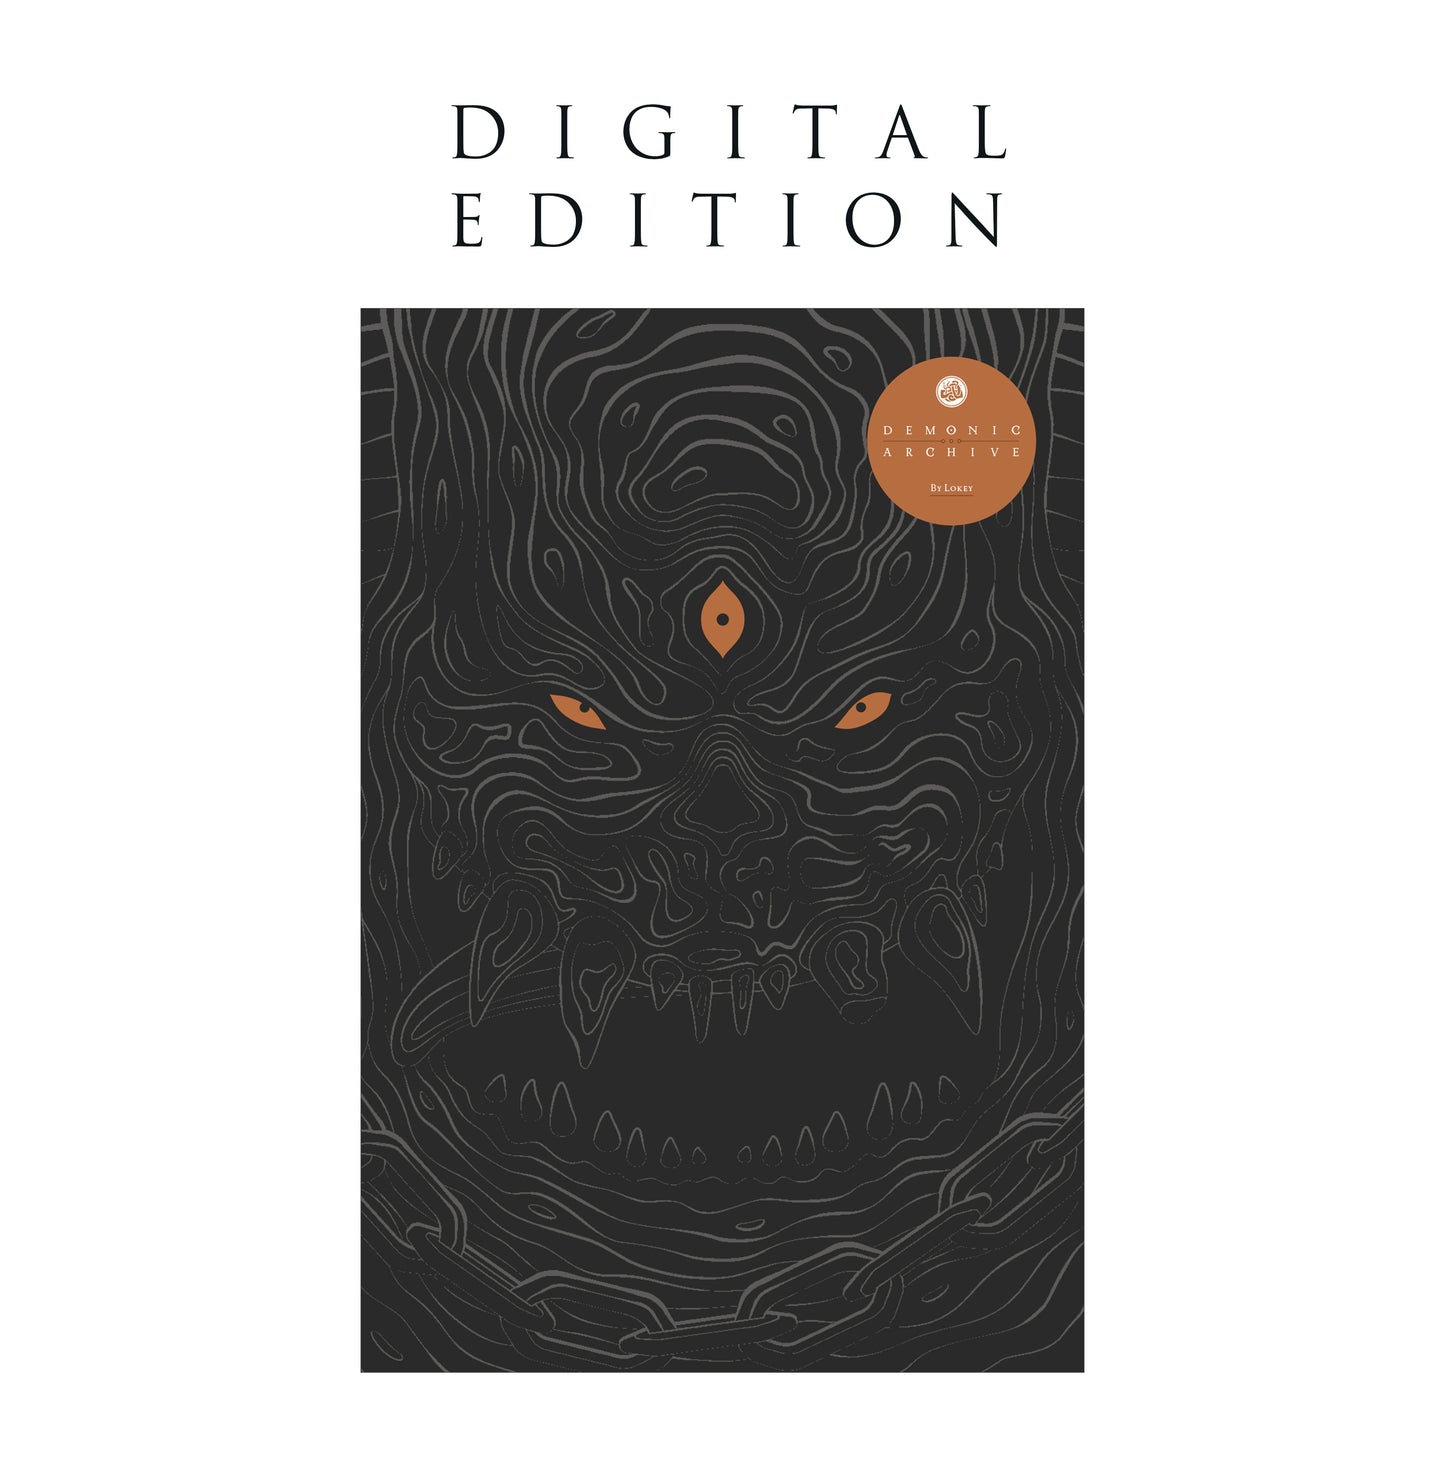 Demonic Archive (digital edition)